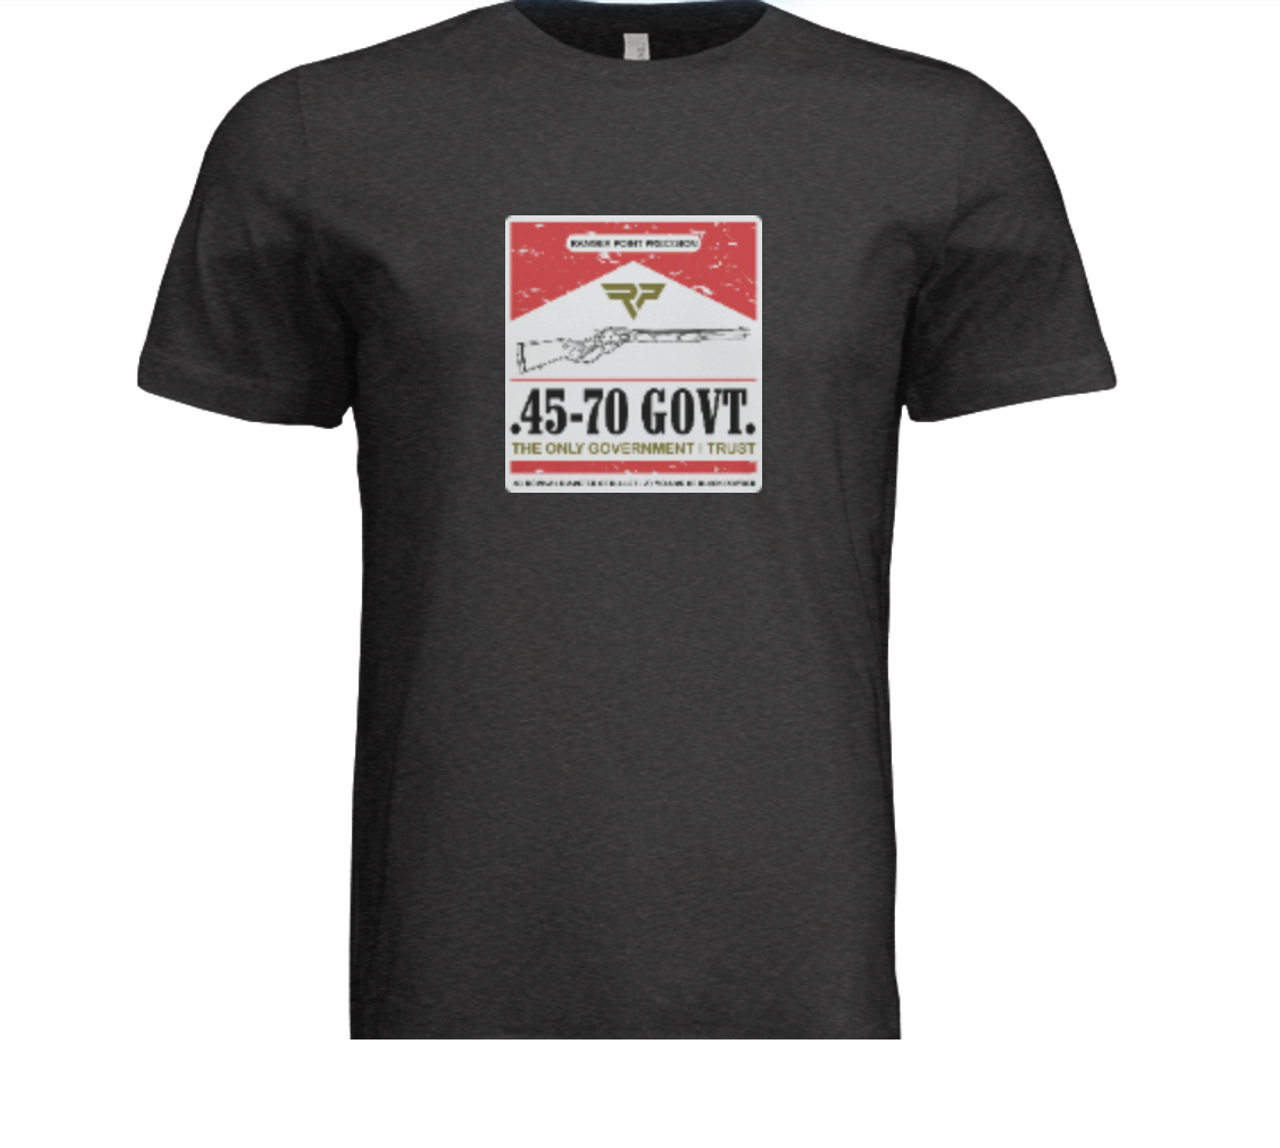 T-shirt 45-70 Govt "Cowboy Killer" - RANGER POINT PRECISION